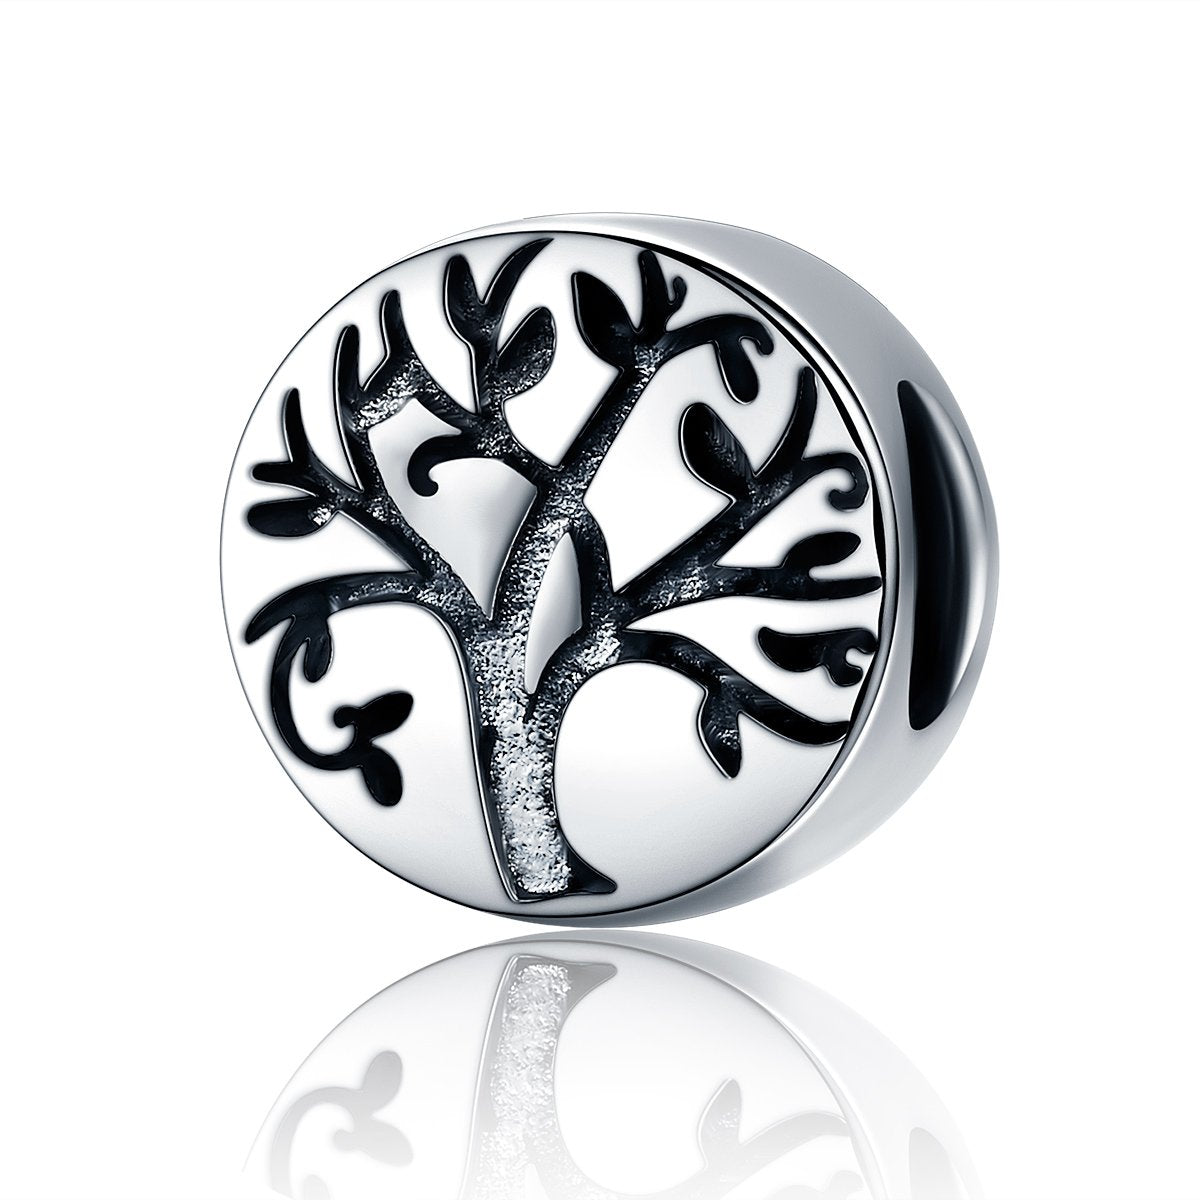 Sterling 925 silver charm the spring tree bead pendant fits Pandora charm and European charm bracelet Xaxe.com